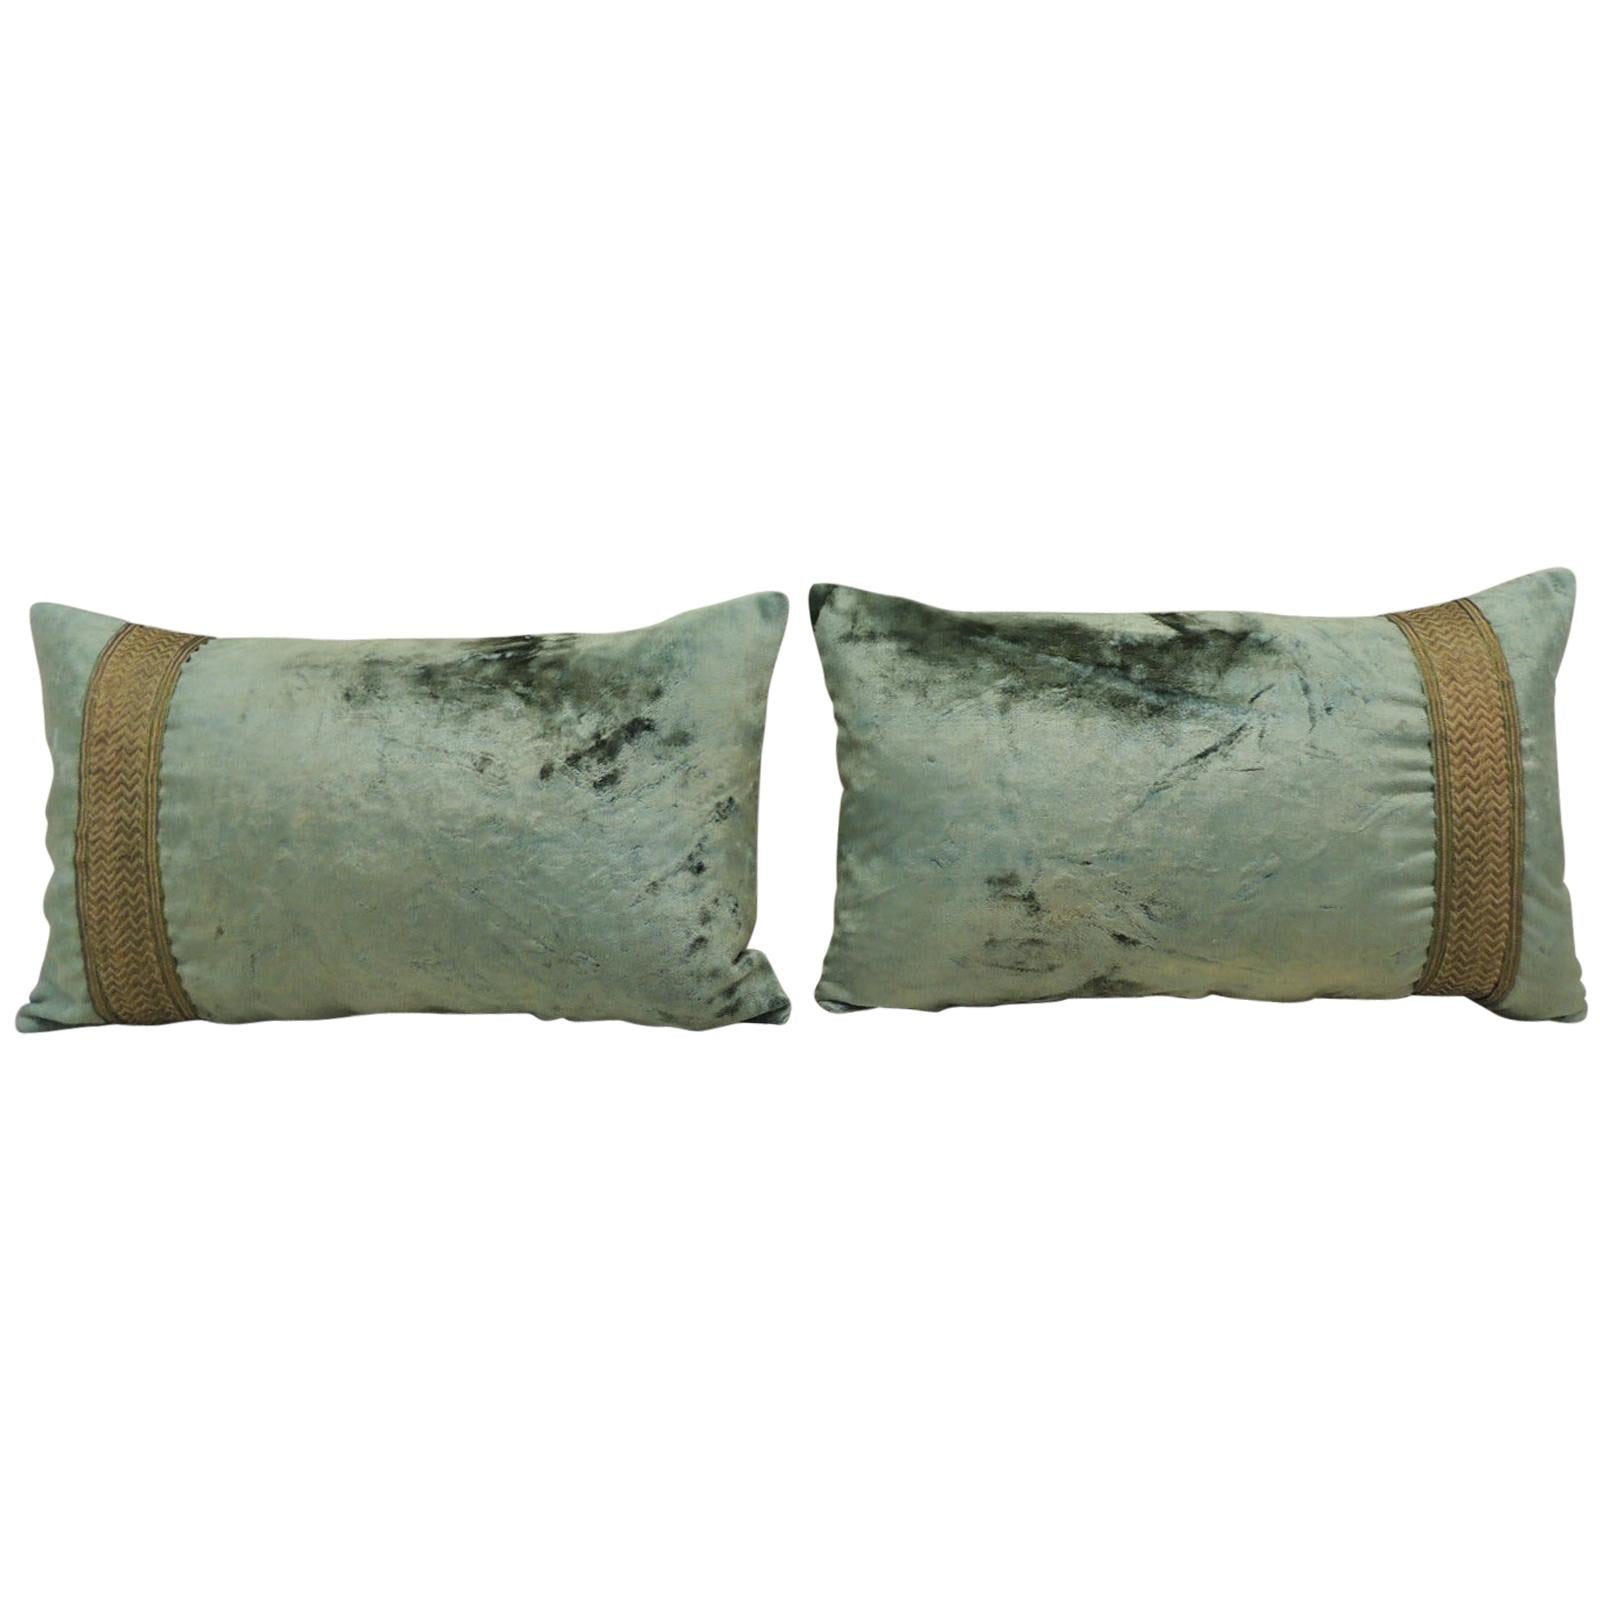 Pair of Antique Crushed Velvet Green and Gold Lumbar Decorative Pillows